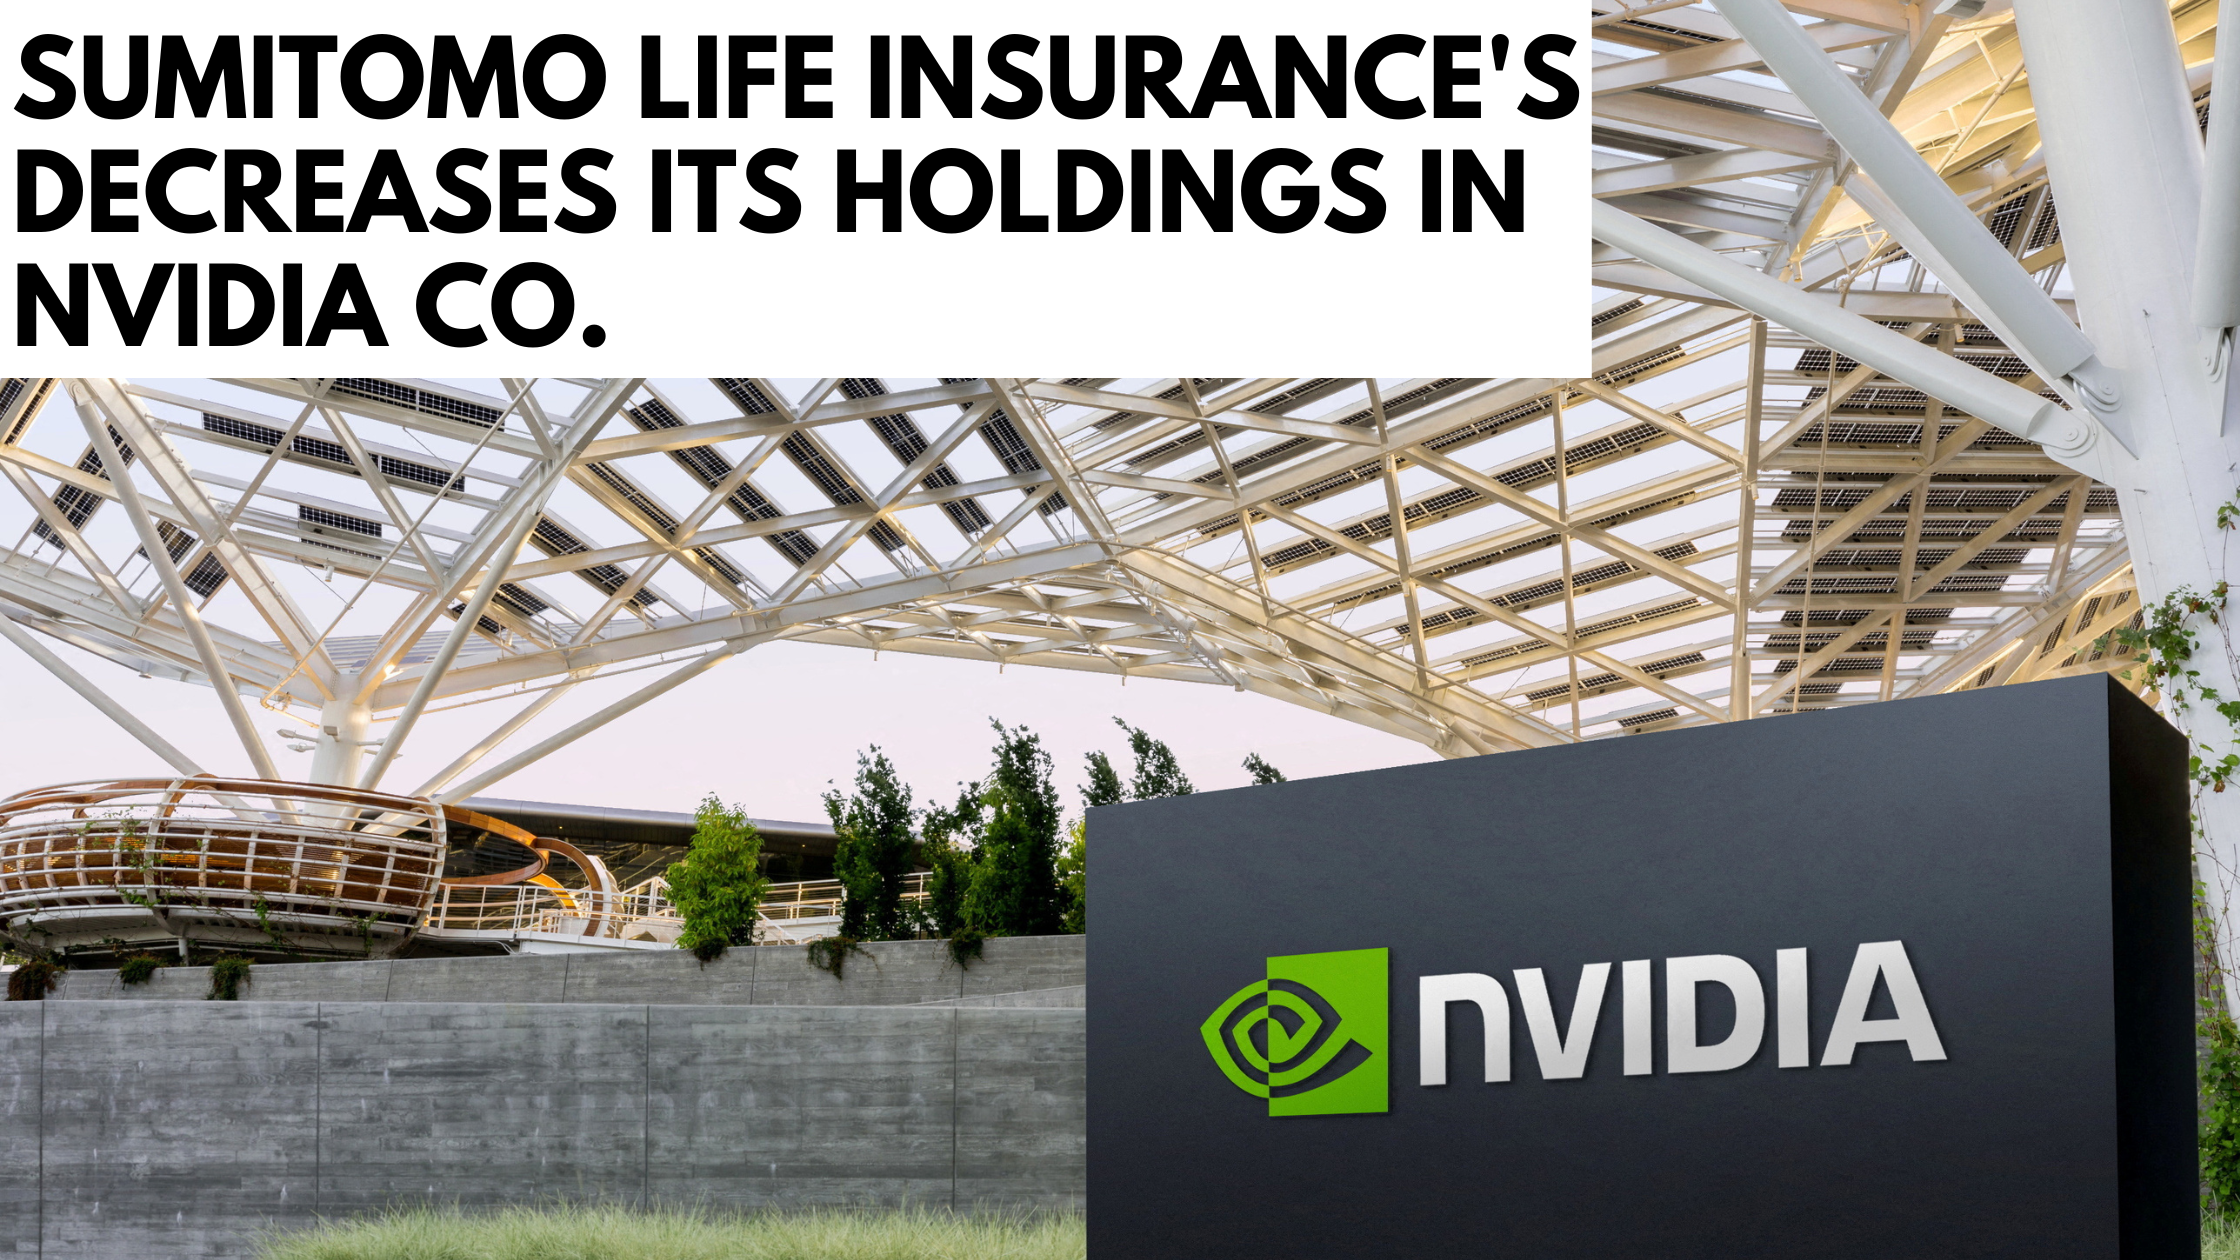 Sumitomo Life Insurance's decreases its holdings in NVIDIA Co